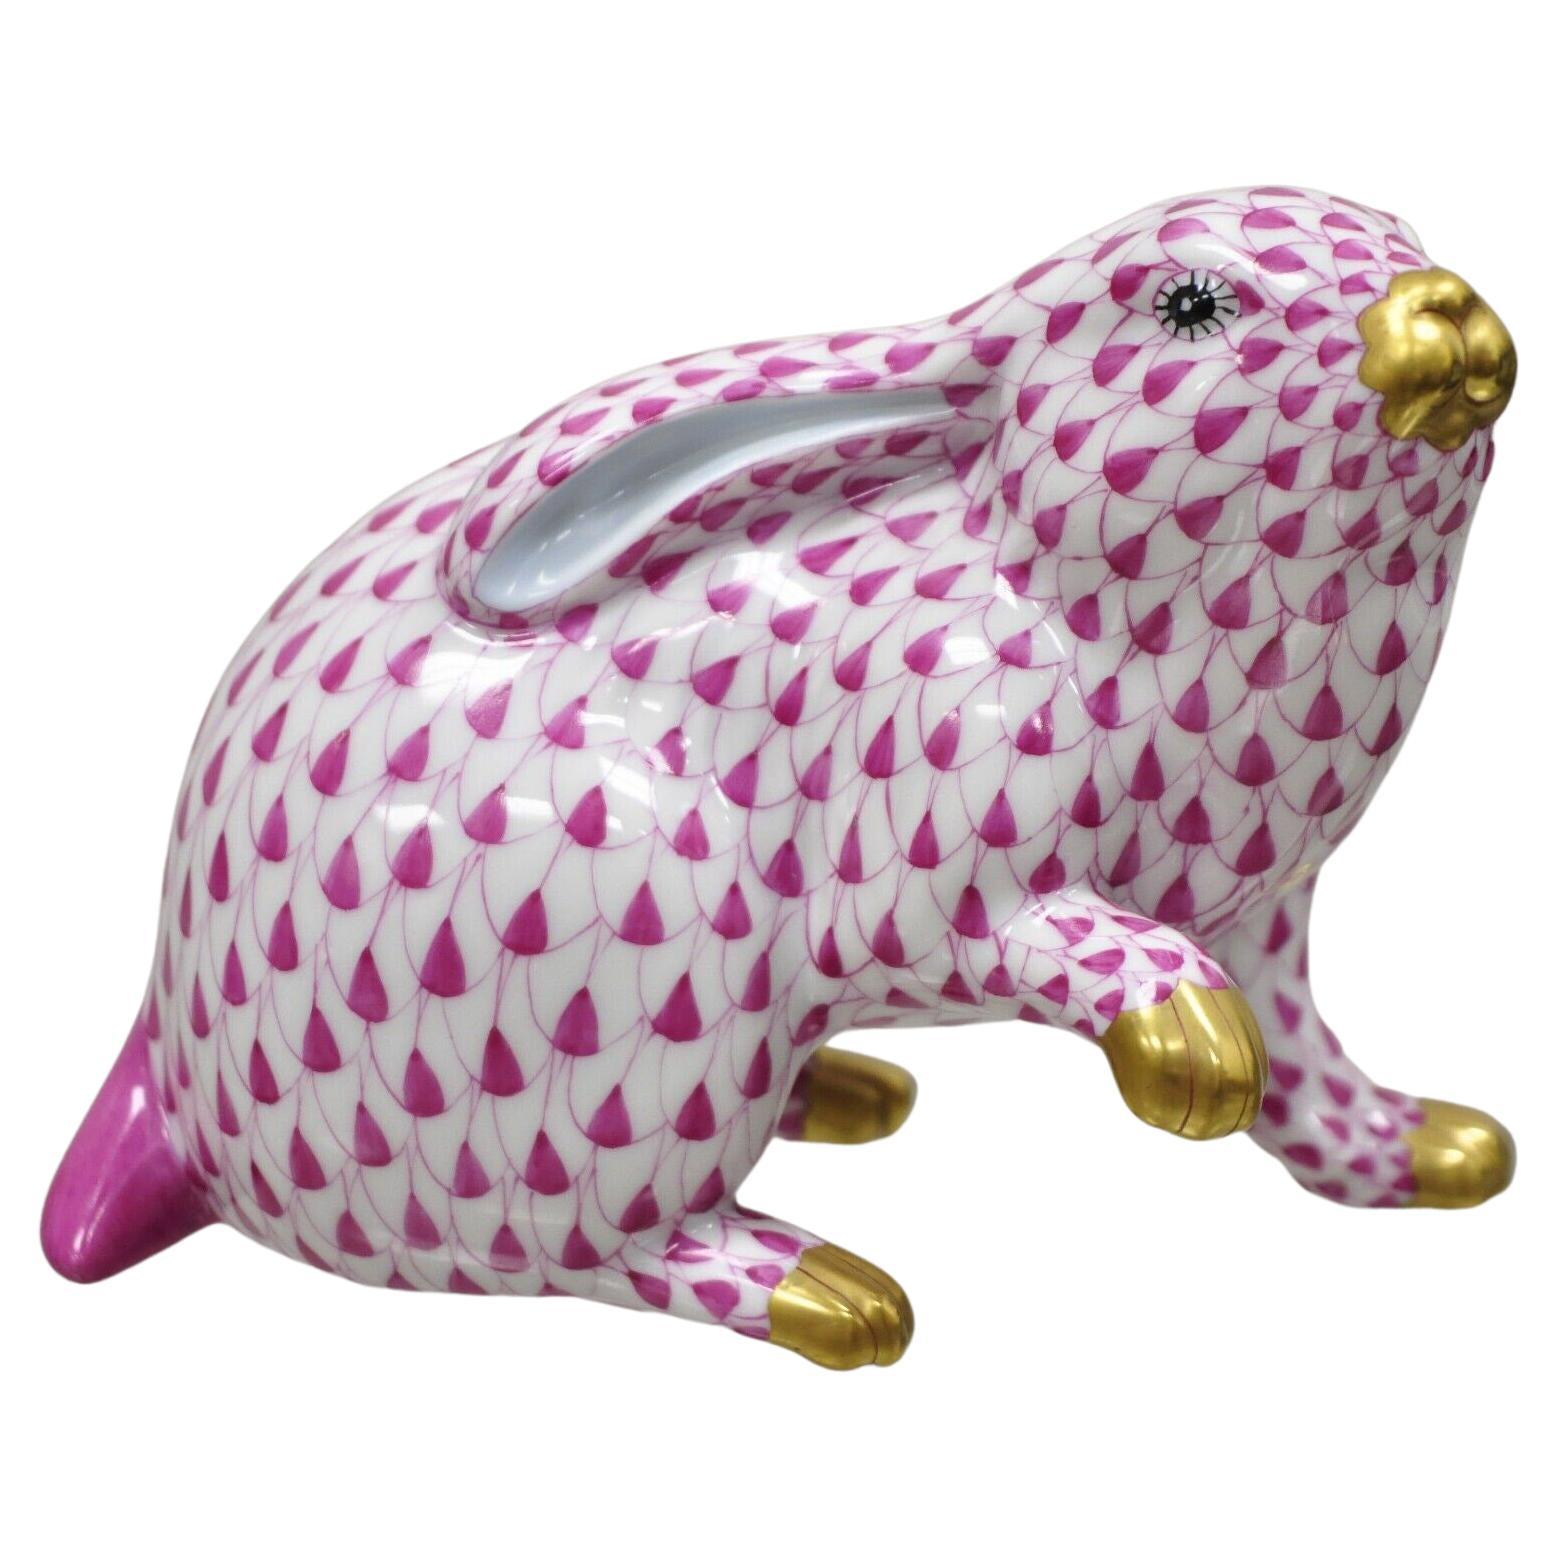 Herend Hungary 5335 Raspberry Fishnet Porcelain Bunny Rabbit Sitting Figurine